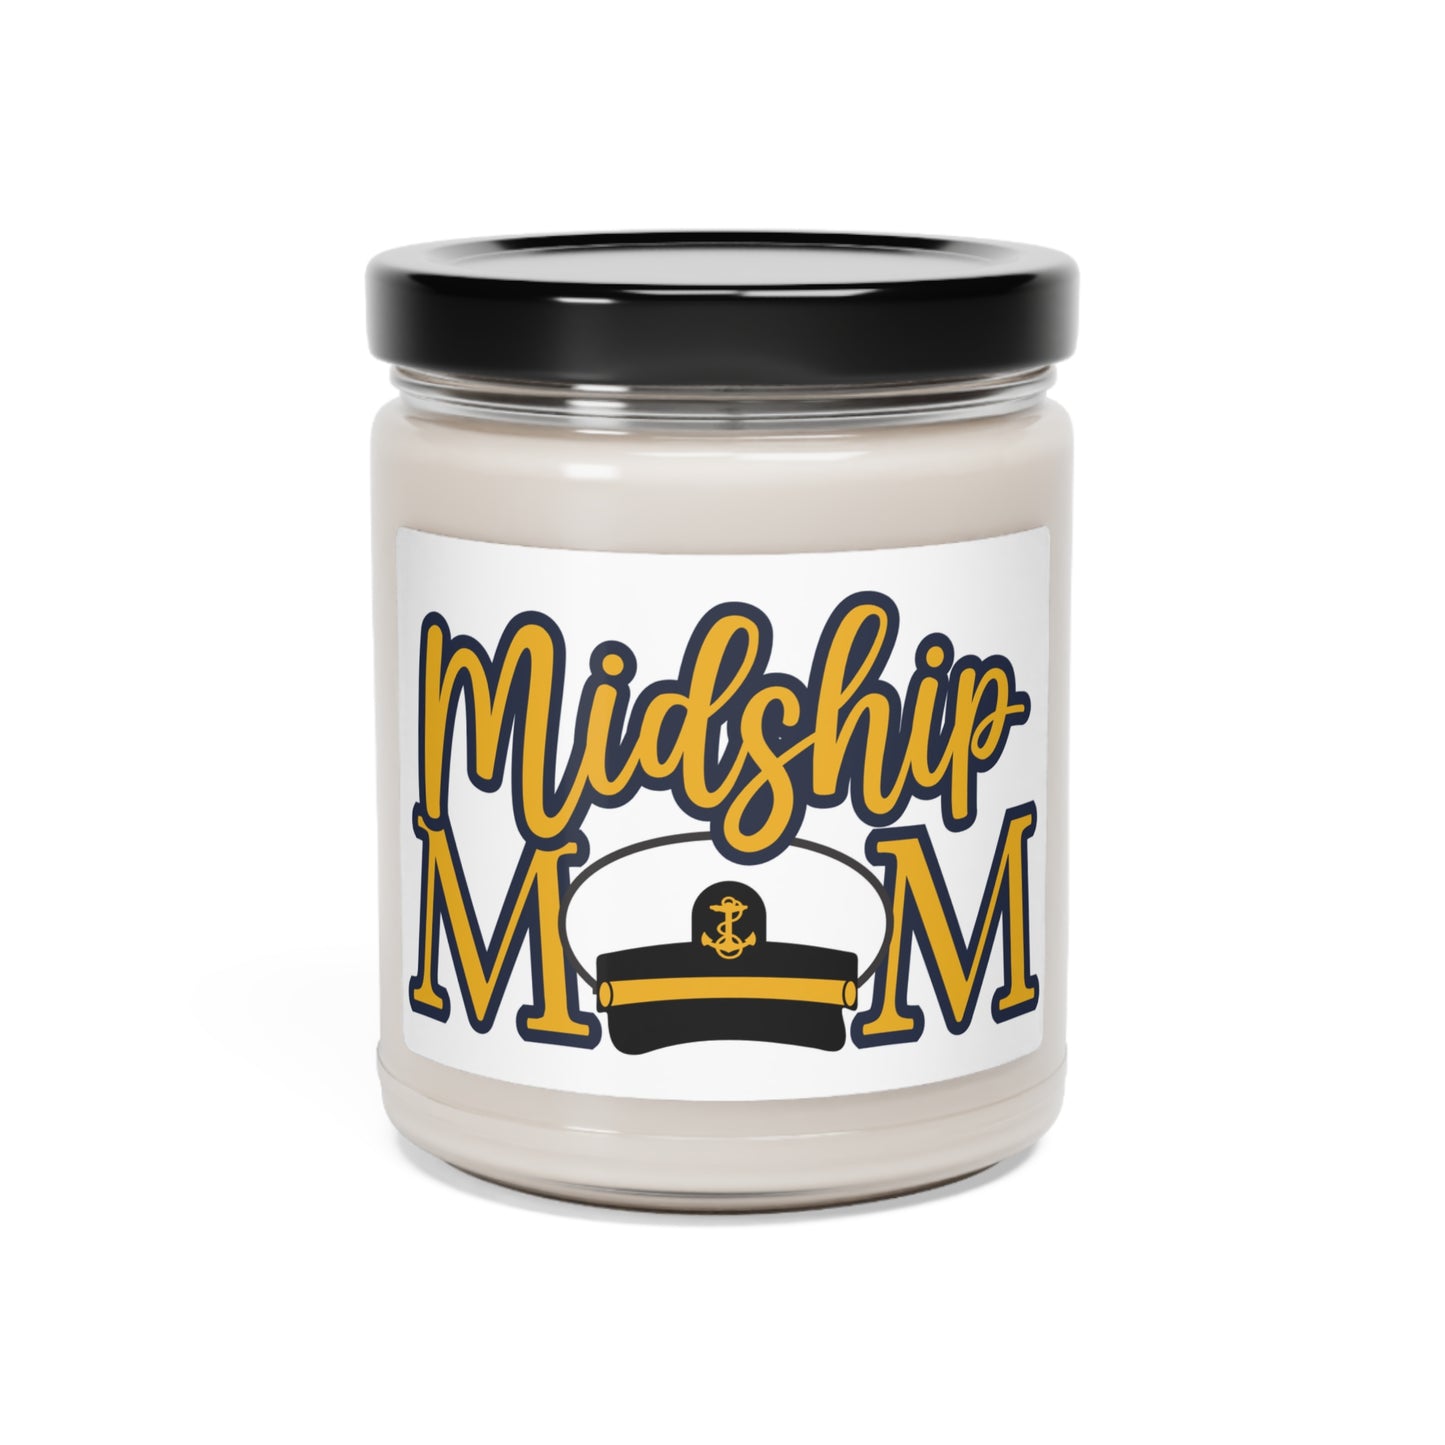 Midshipmom Candle - 9 oz